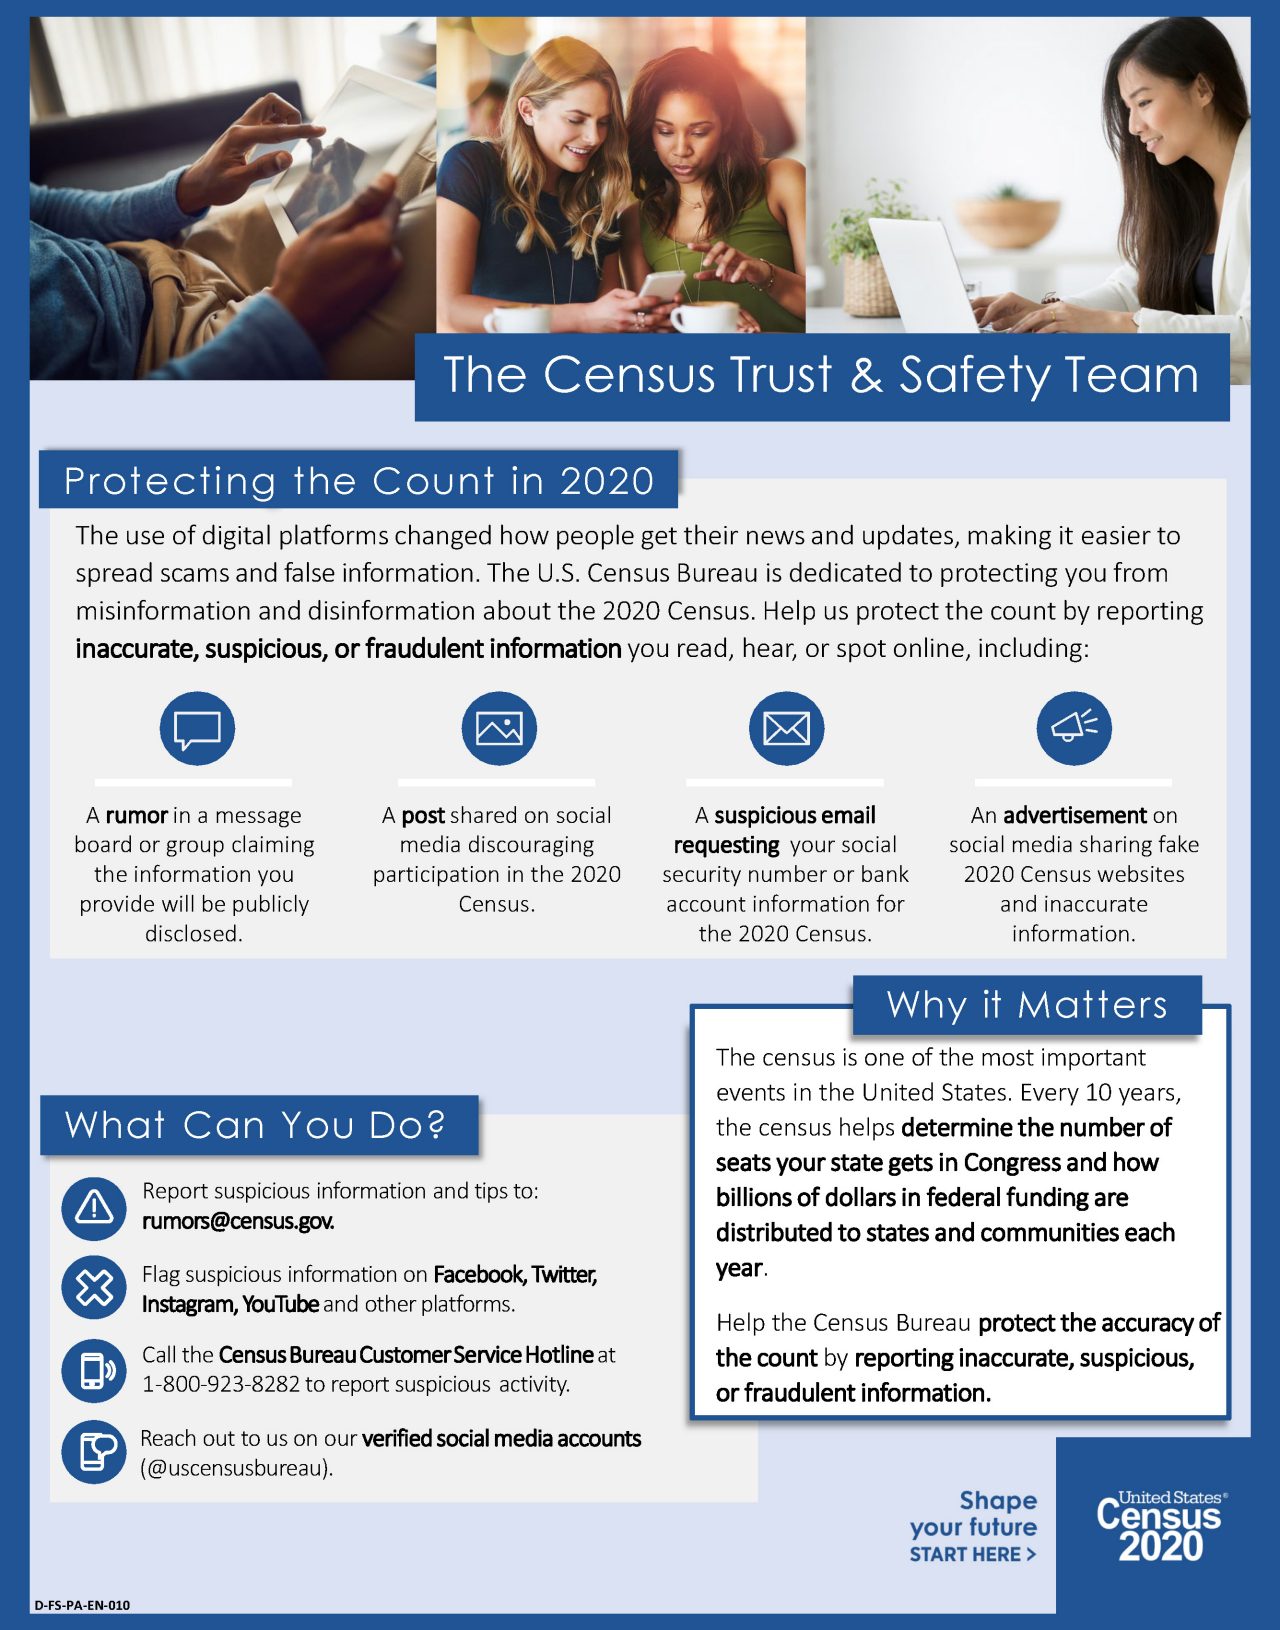 2020 Census: The Census Trust & Safety Team